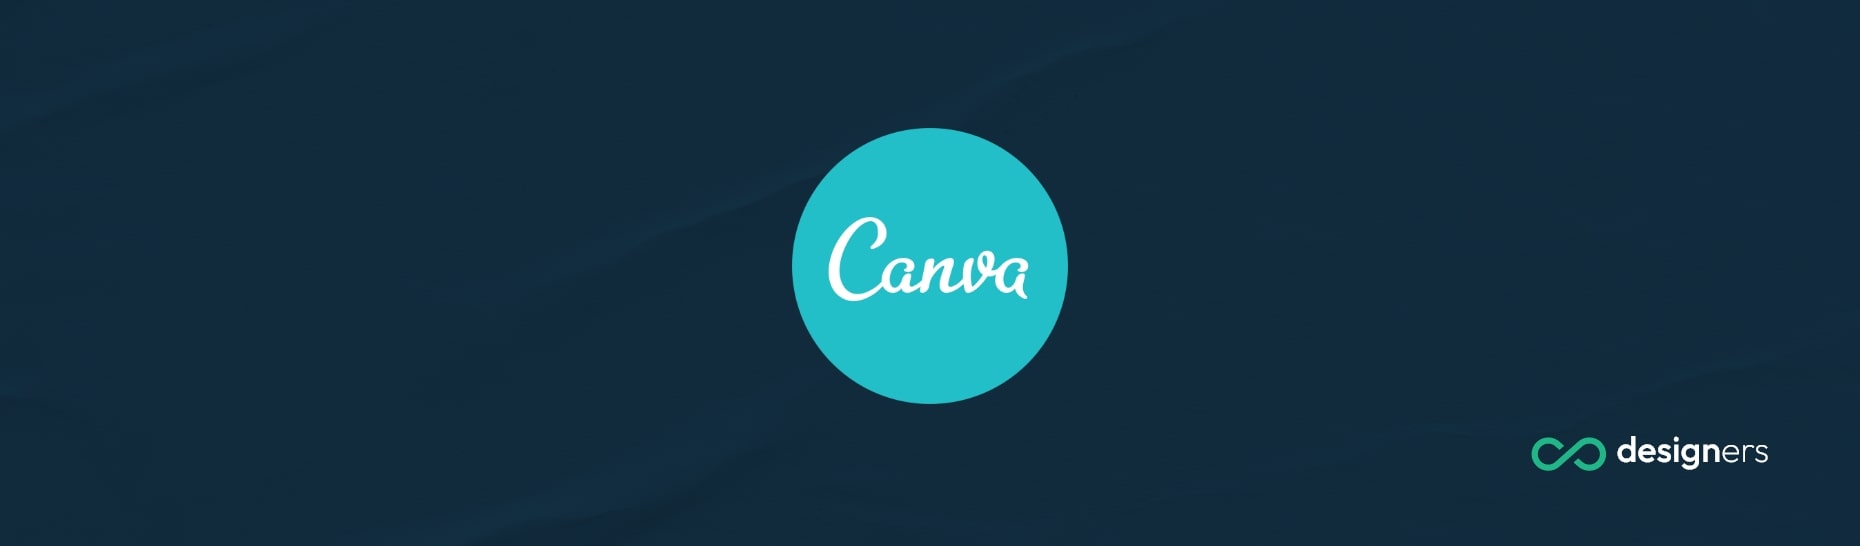 Is Canva a Google Company?